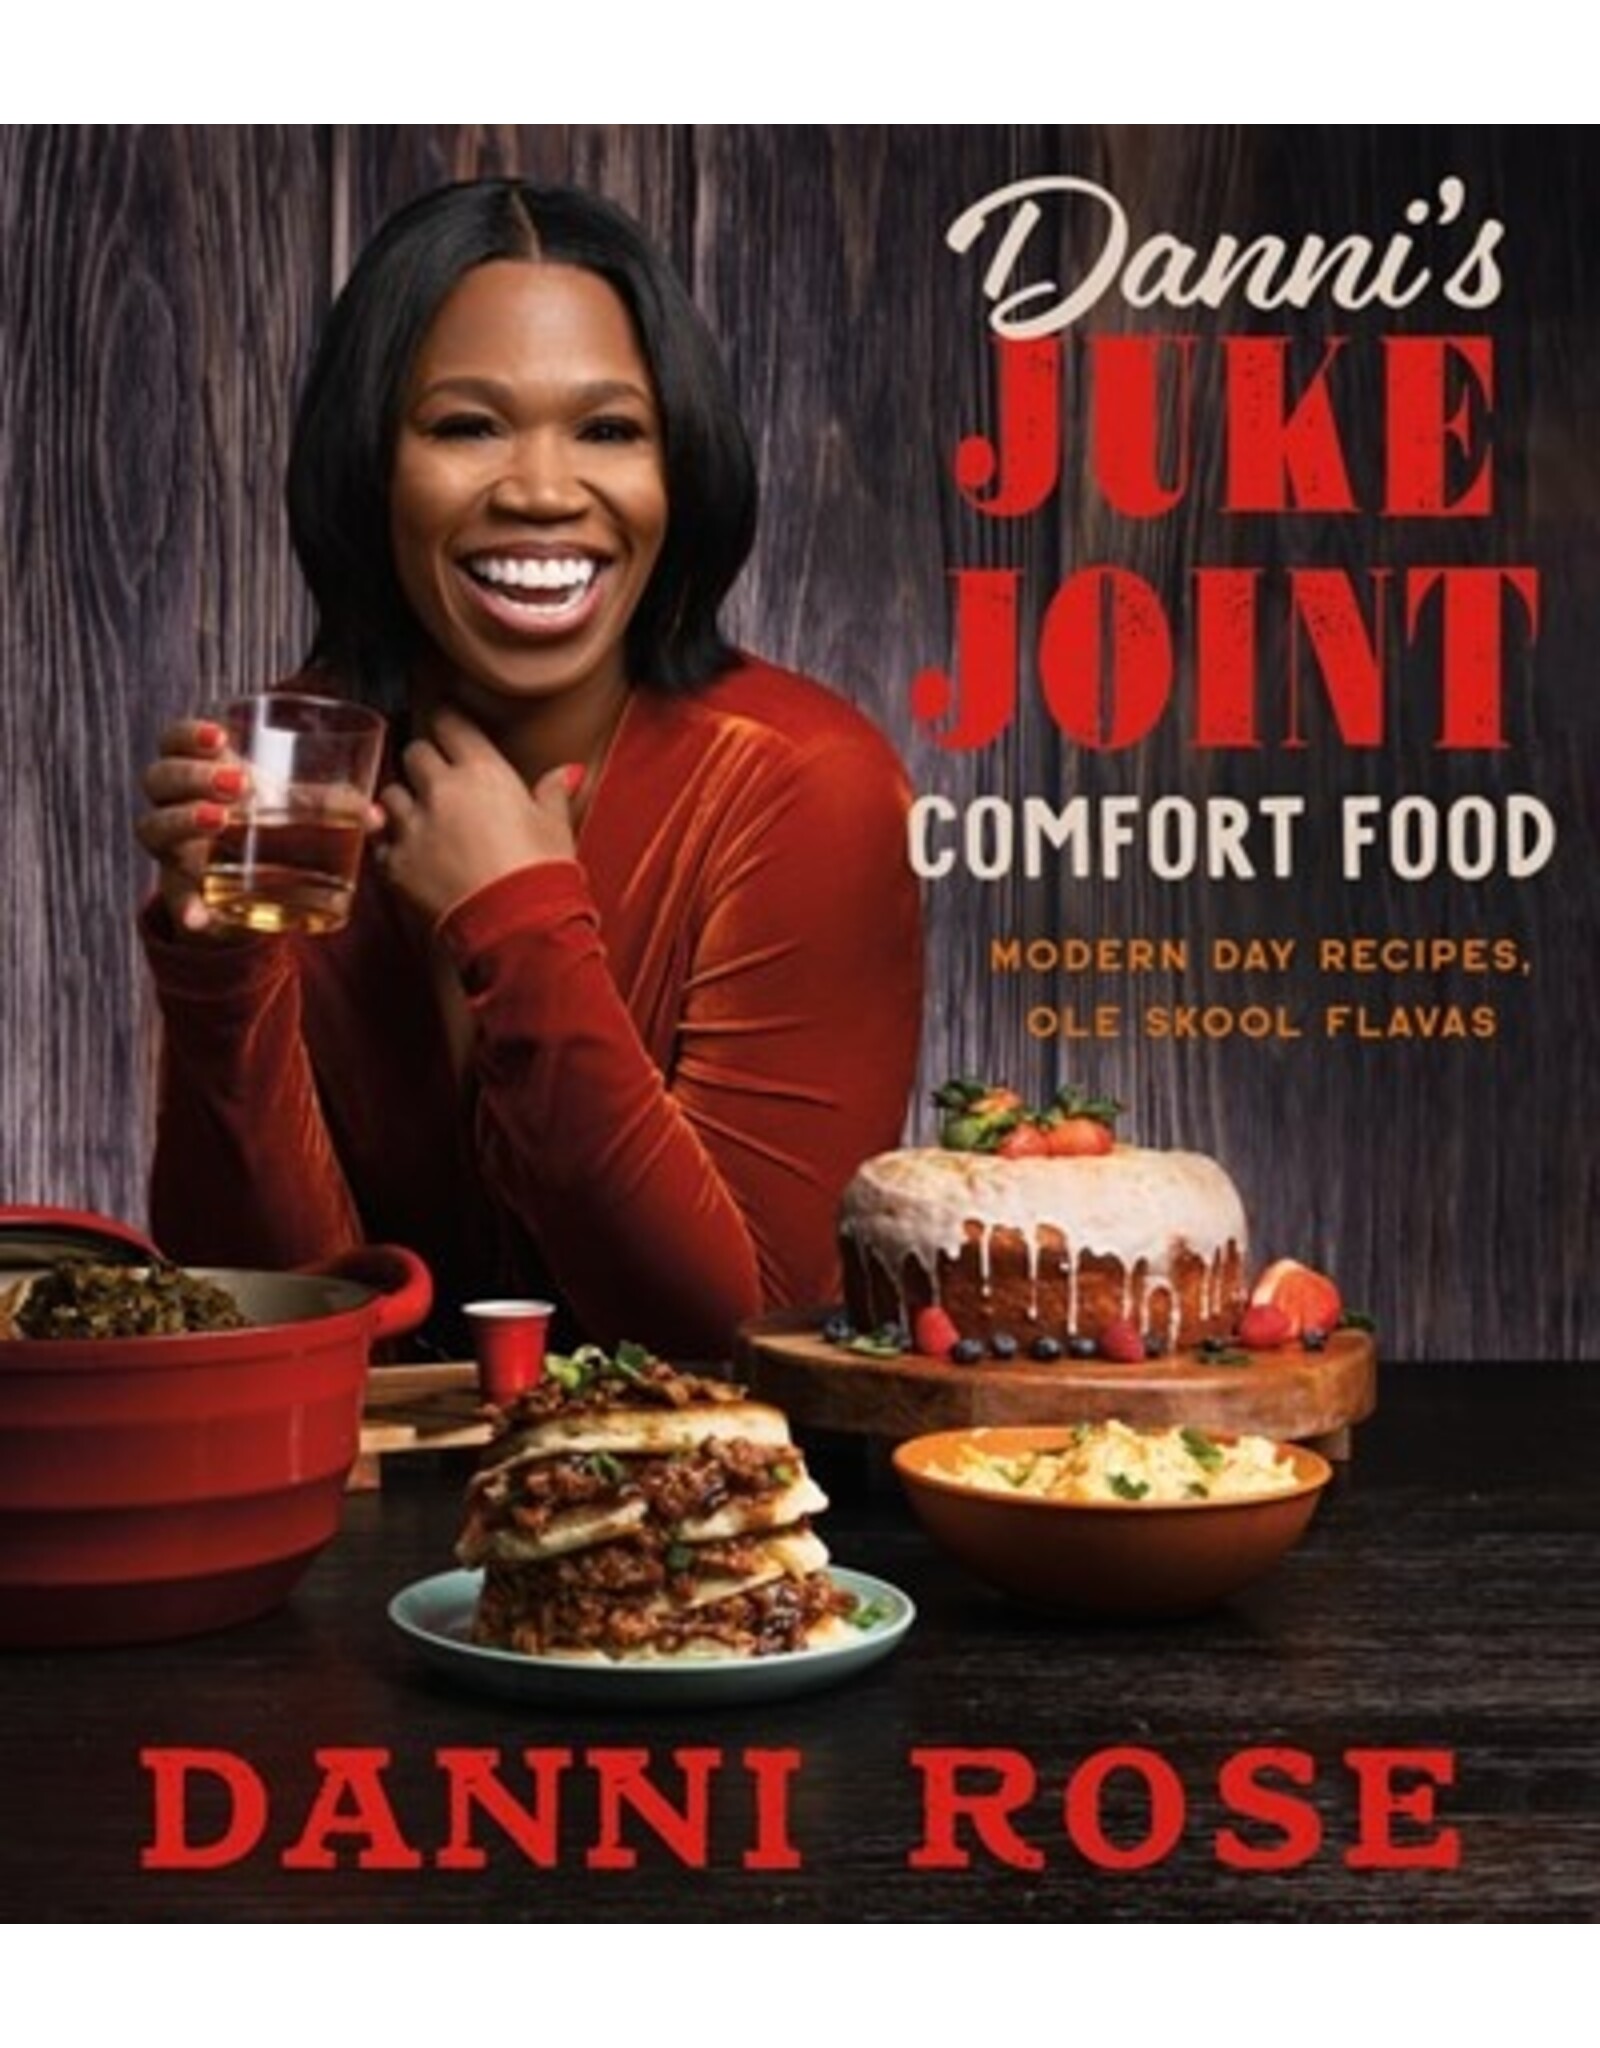 Books Danni's Juke Joint Comfort Food by Danni Rose